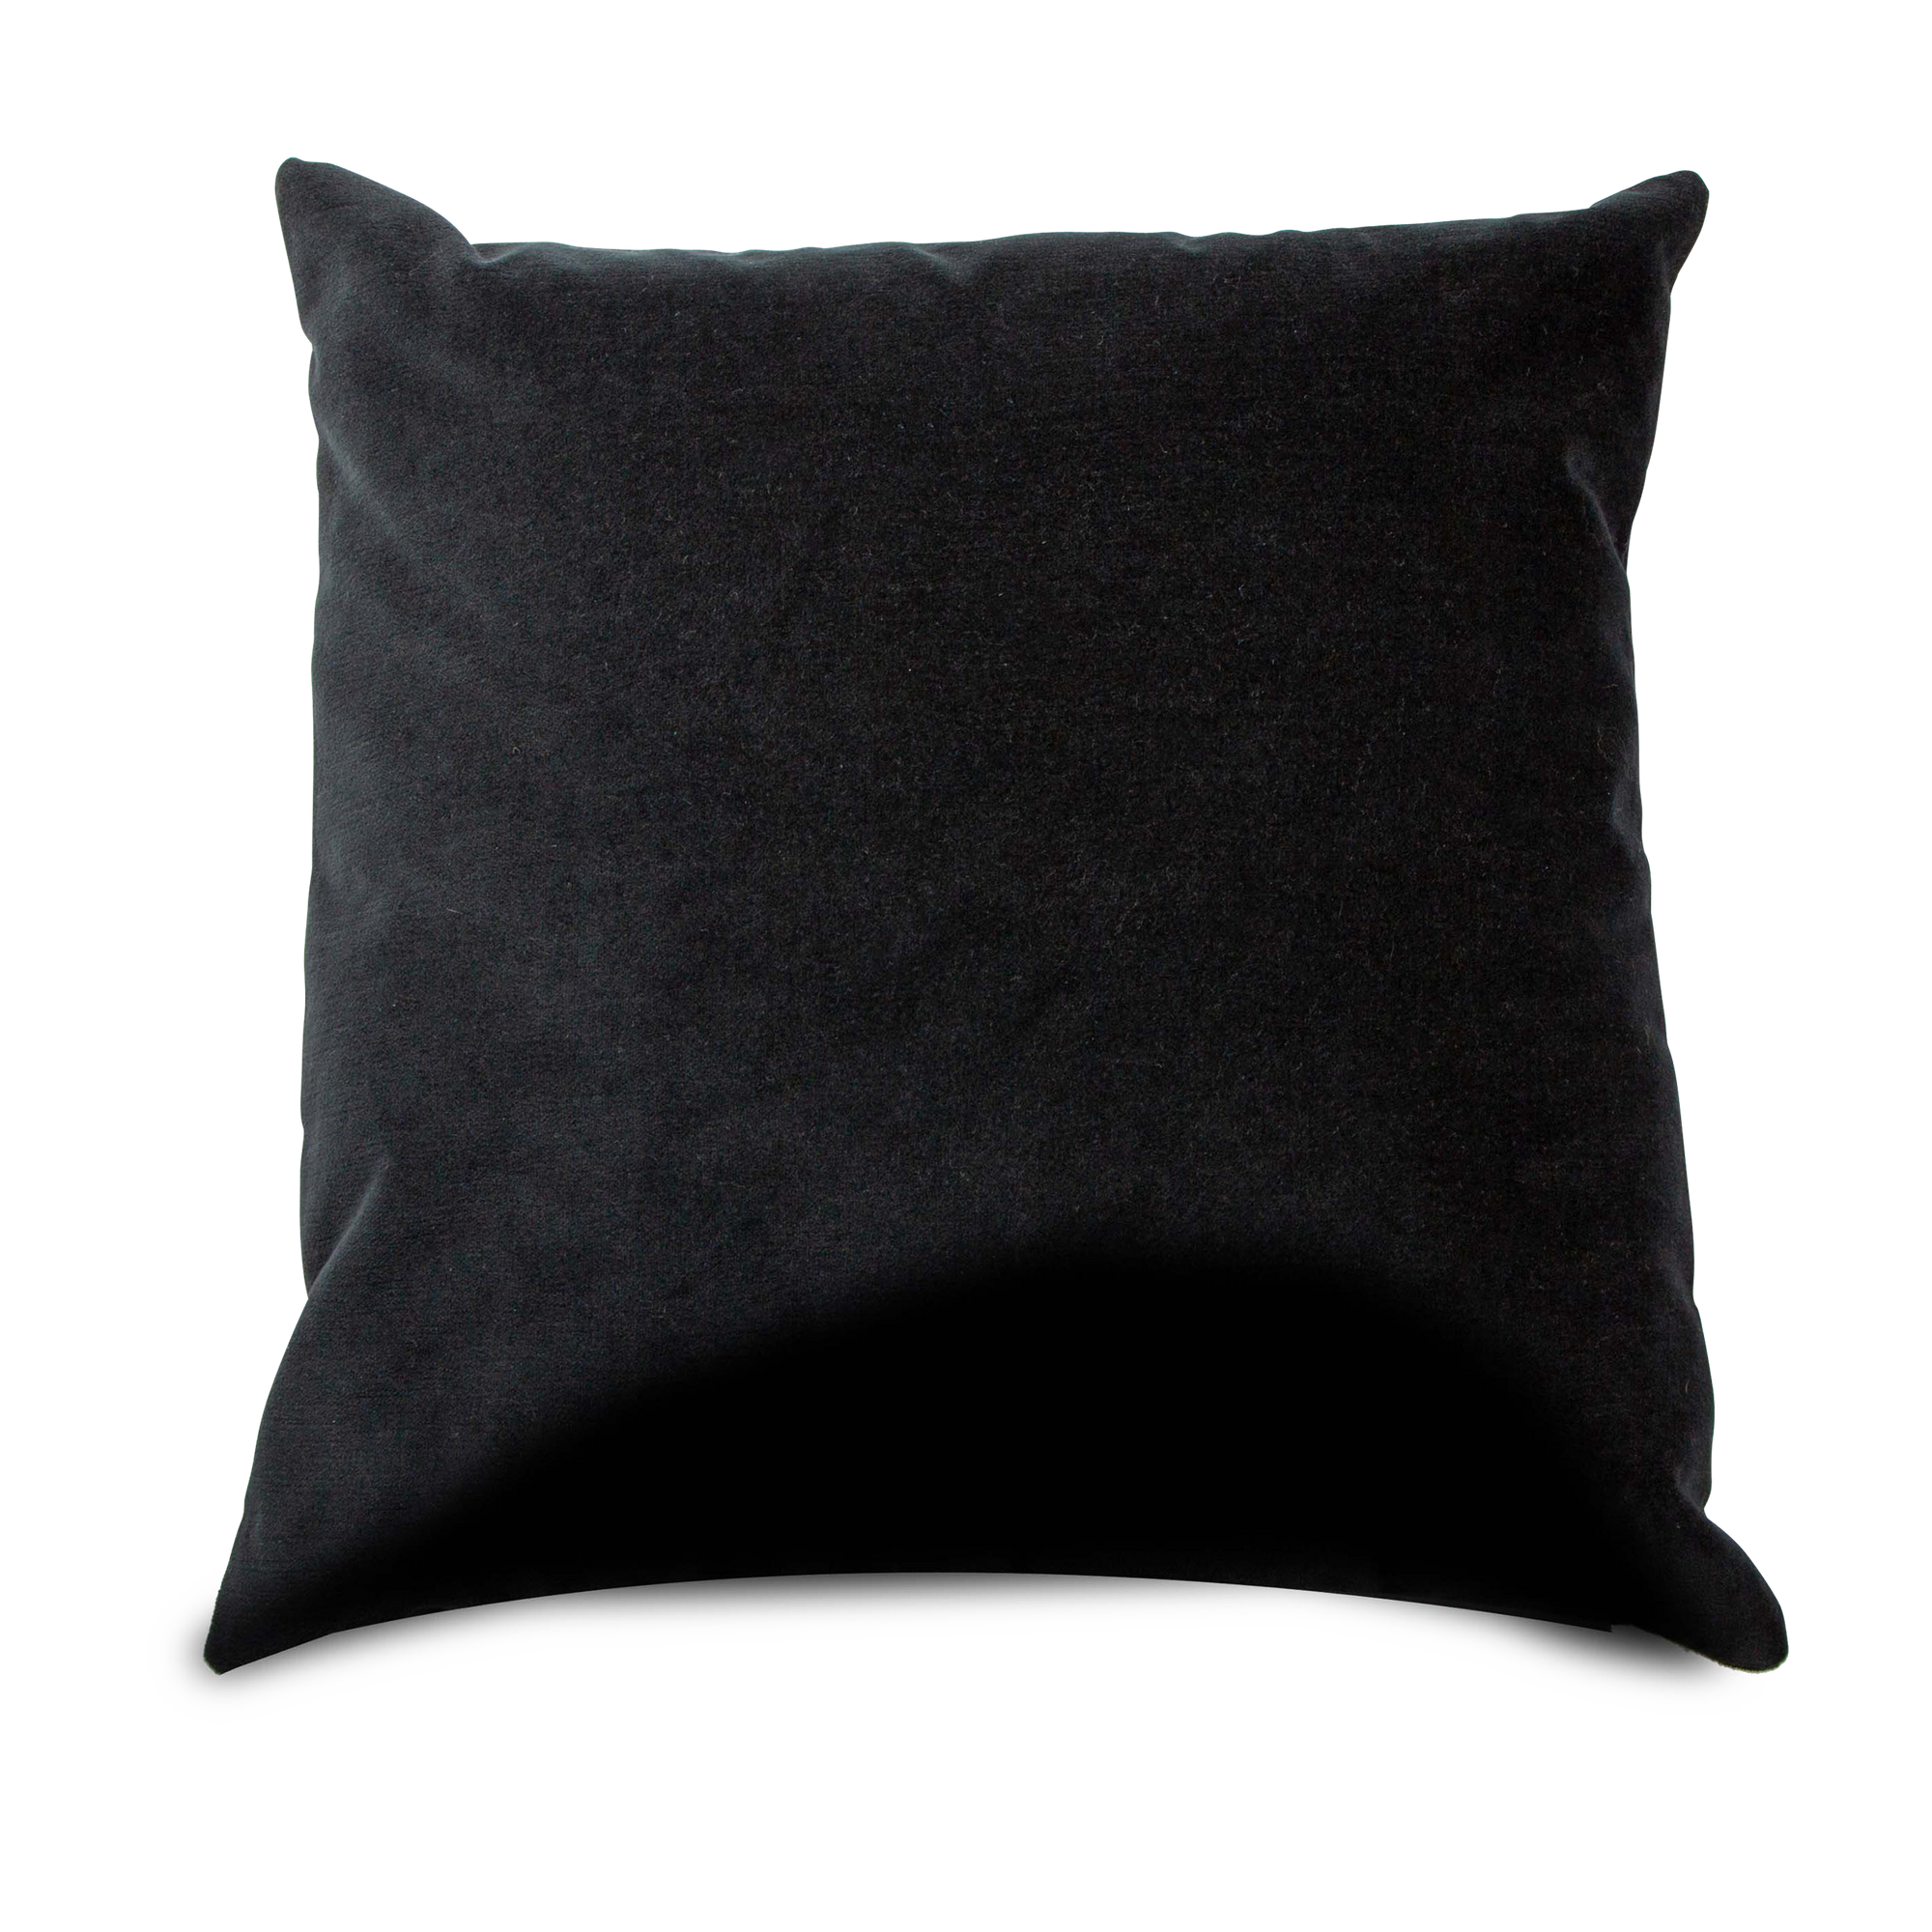 An elegant velvet pillow with gentle striation that creates subtle dimensions.